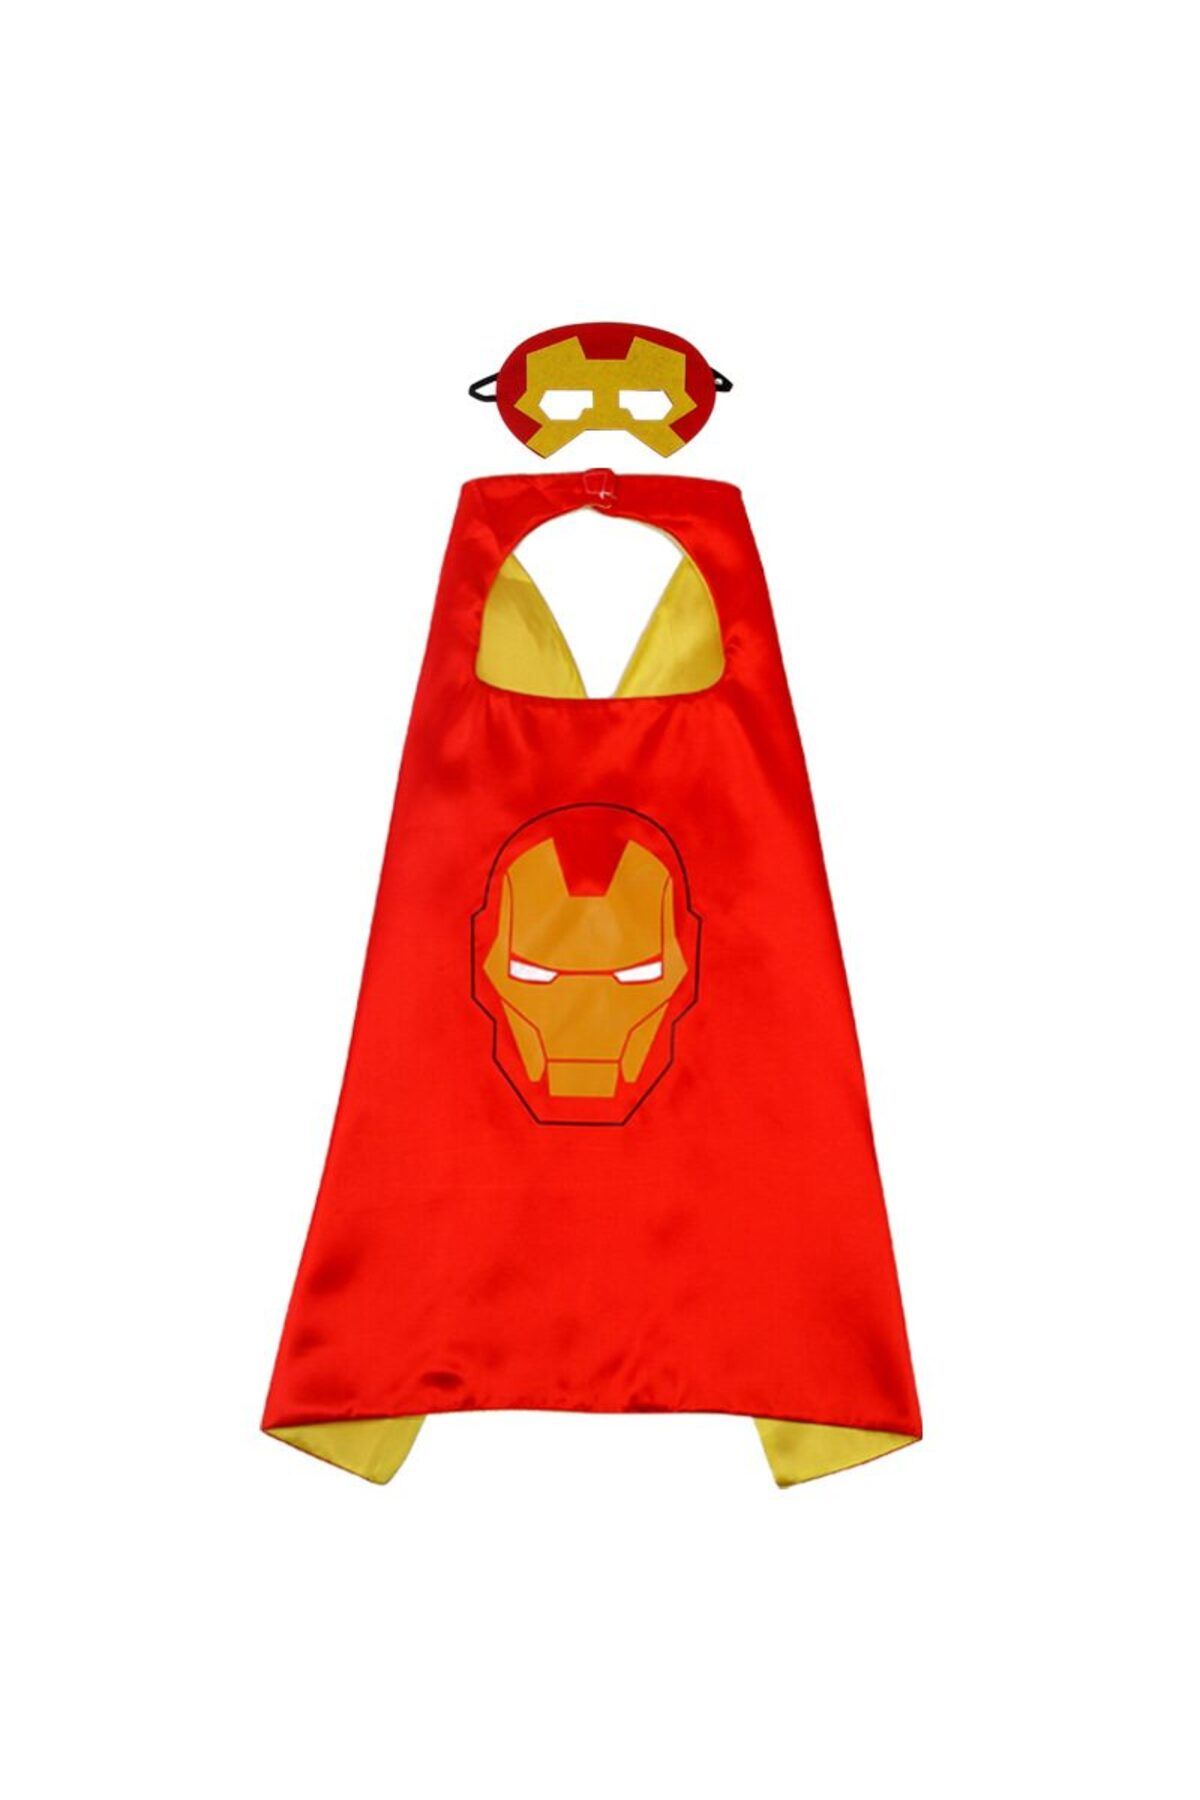 Karce CLZ192 Demir Adam İron Man Avengers Pelerin + Maske Kostüm Seti 70x70 cm (4172)